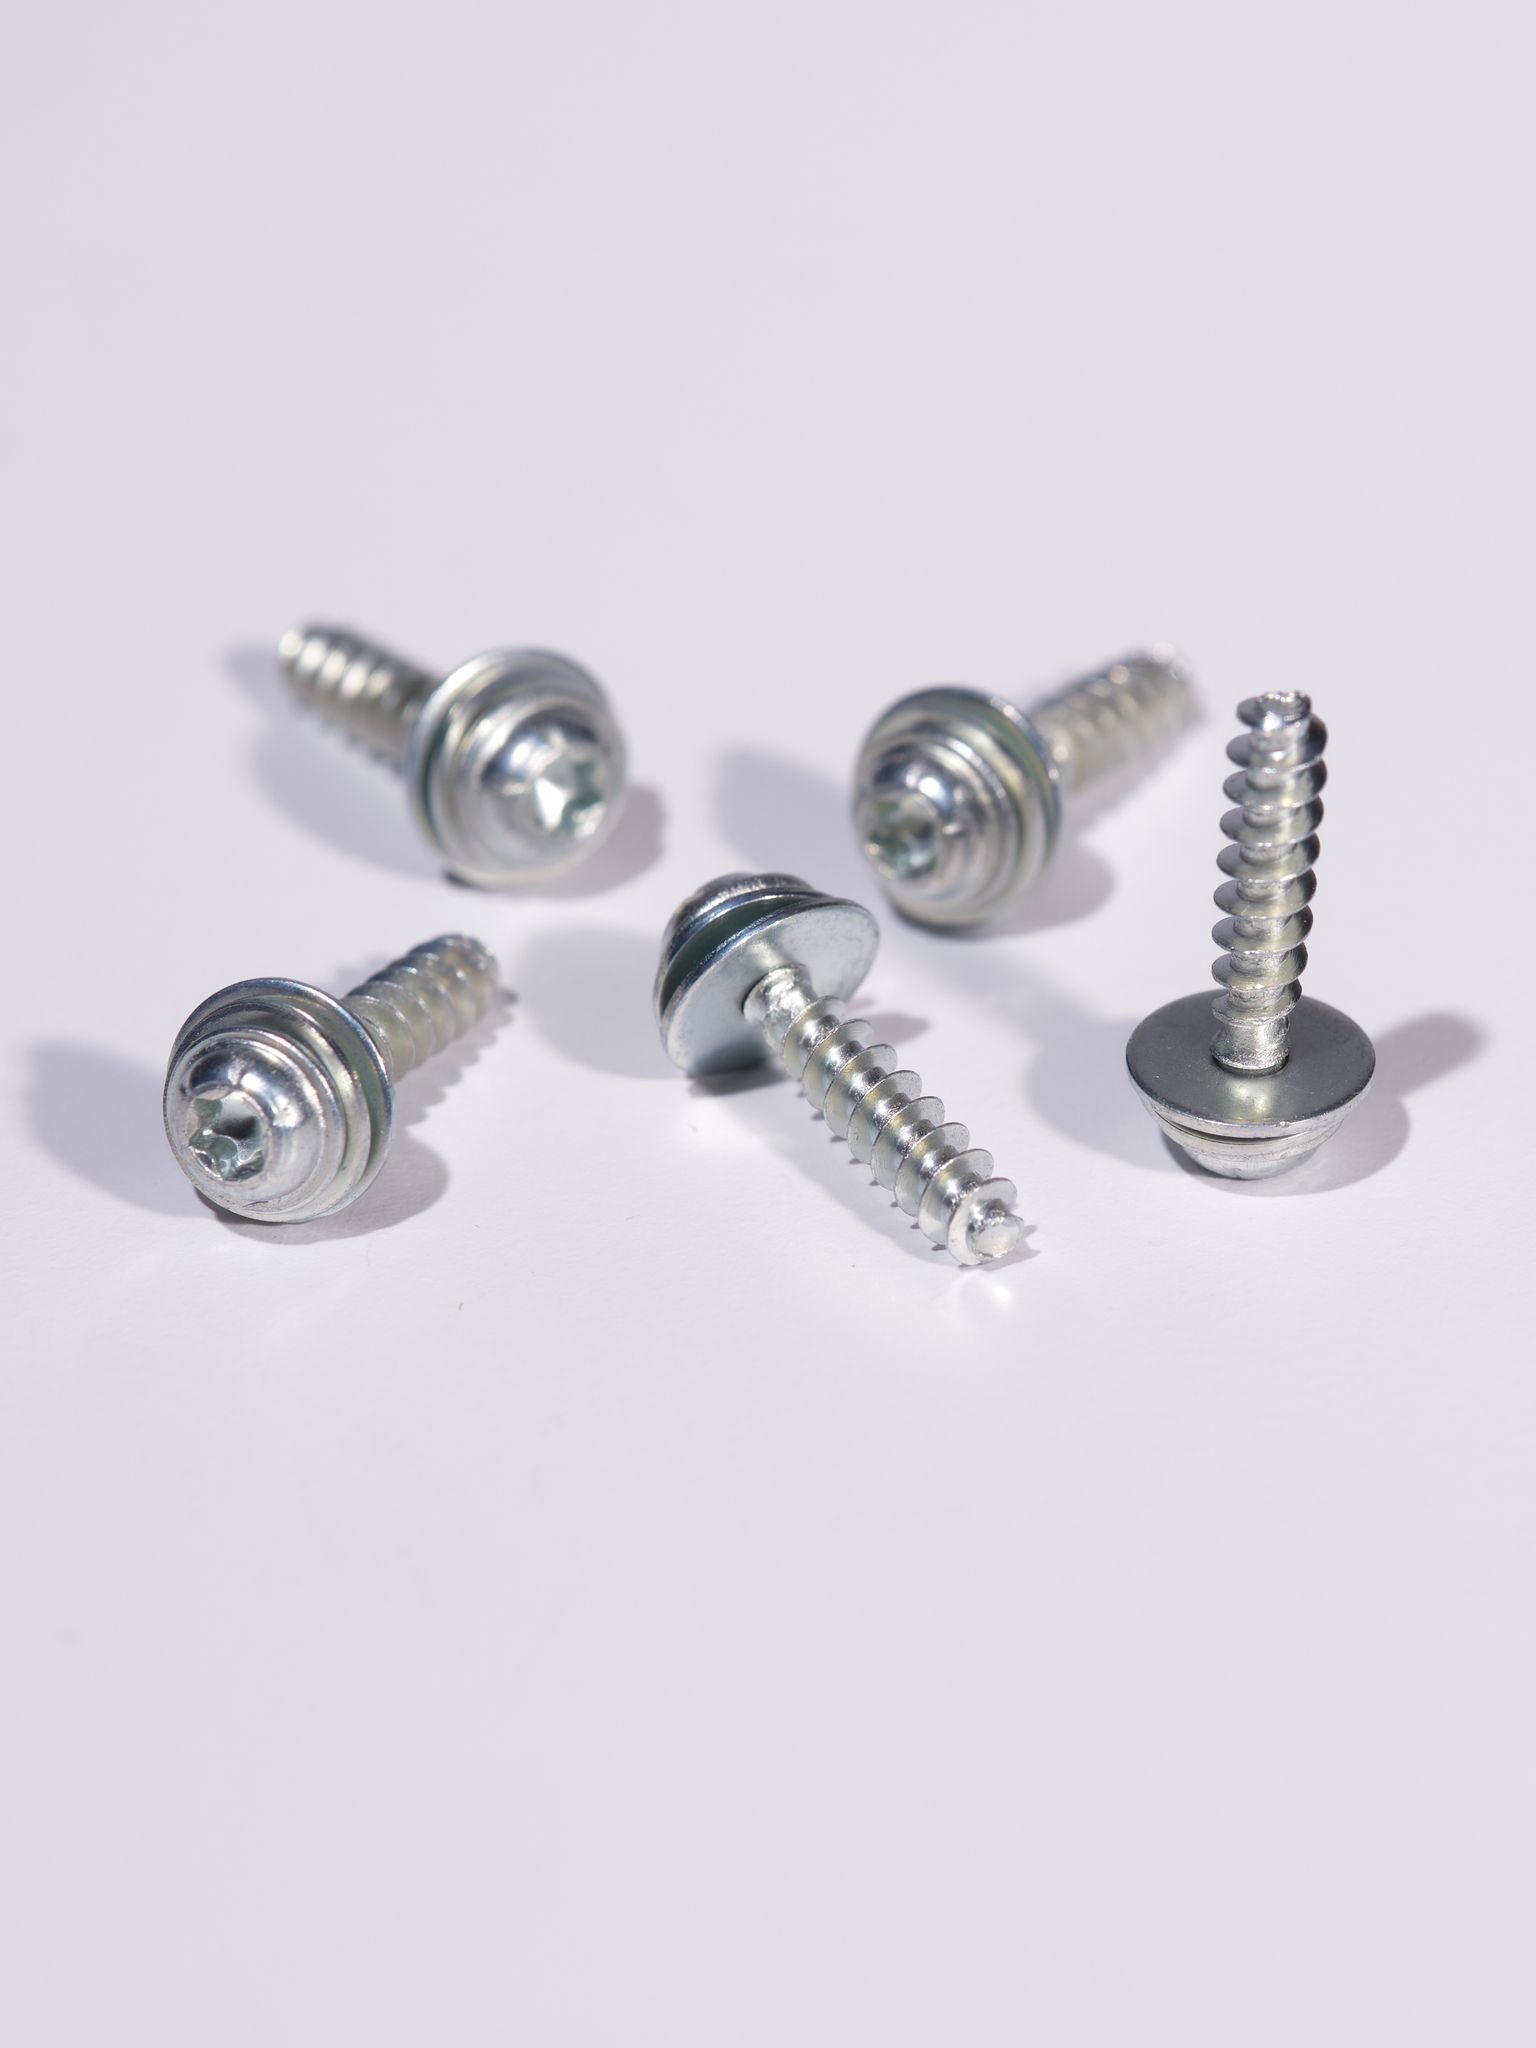 Various welding screws and nuts